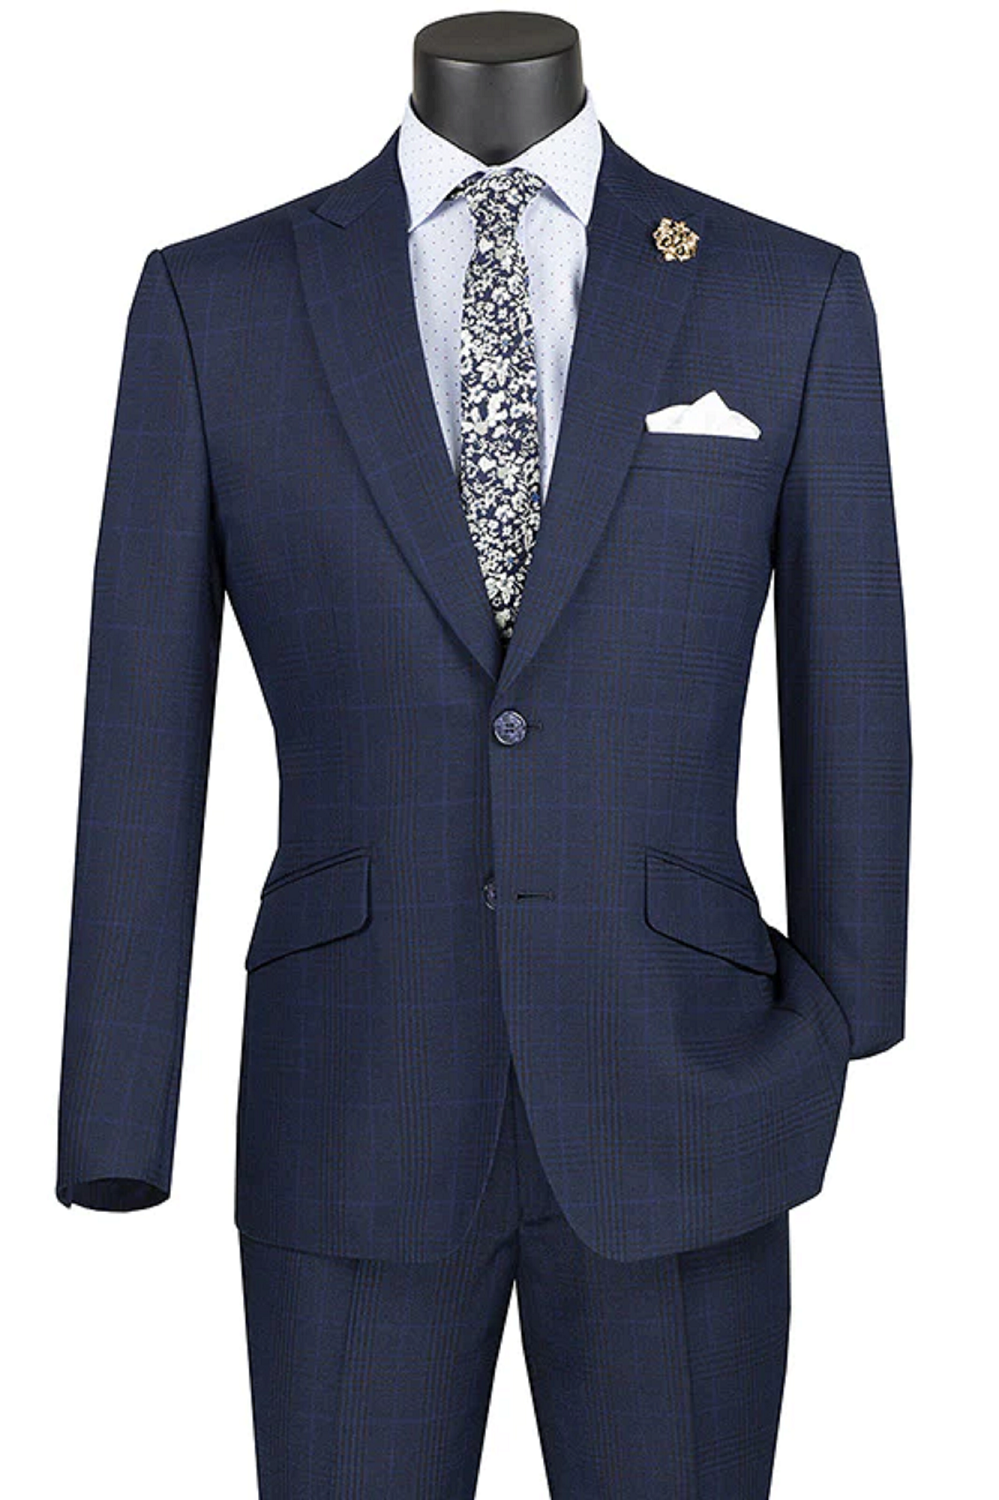 Moderno Collection: Navy 2 Piece Glen Plaid Slim Fit Suit – Suits & More